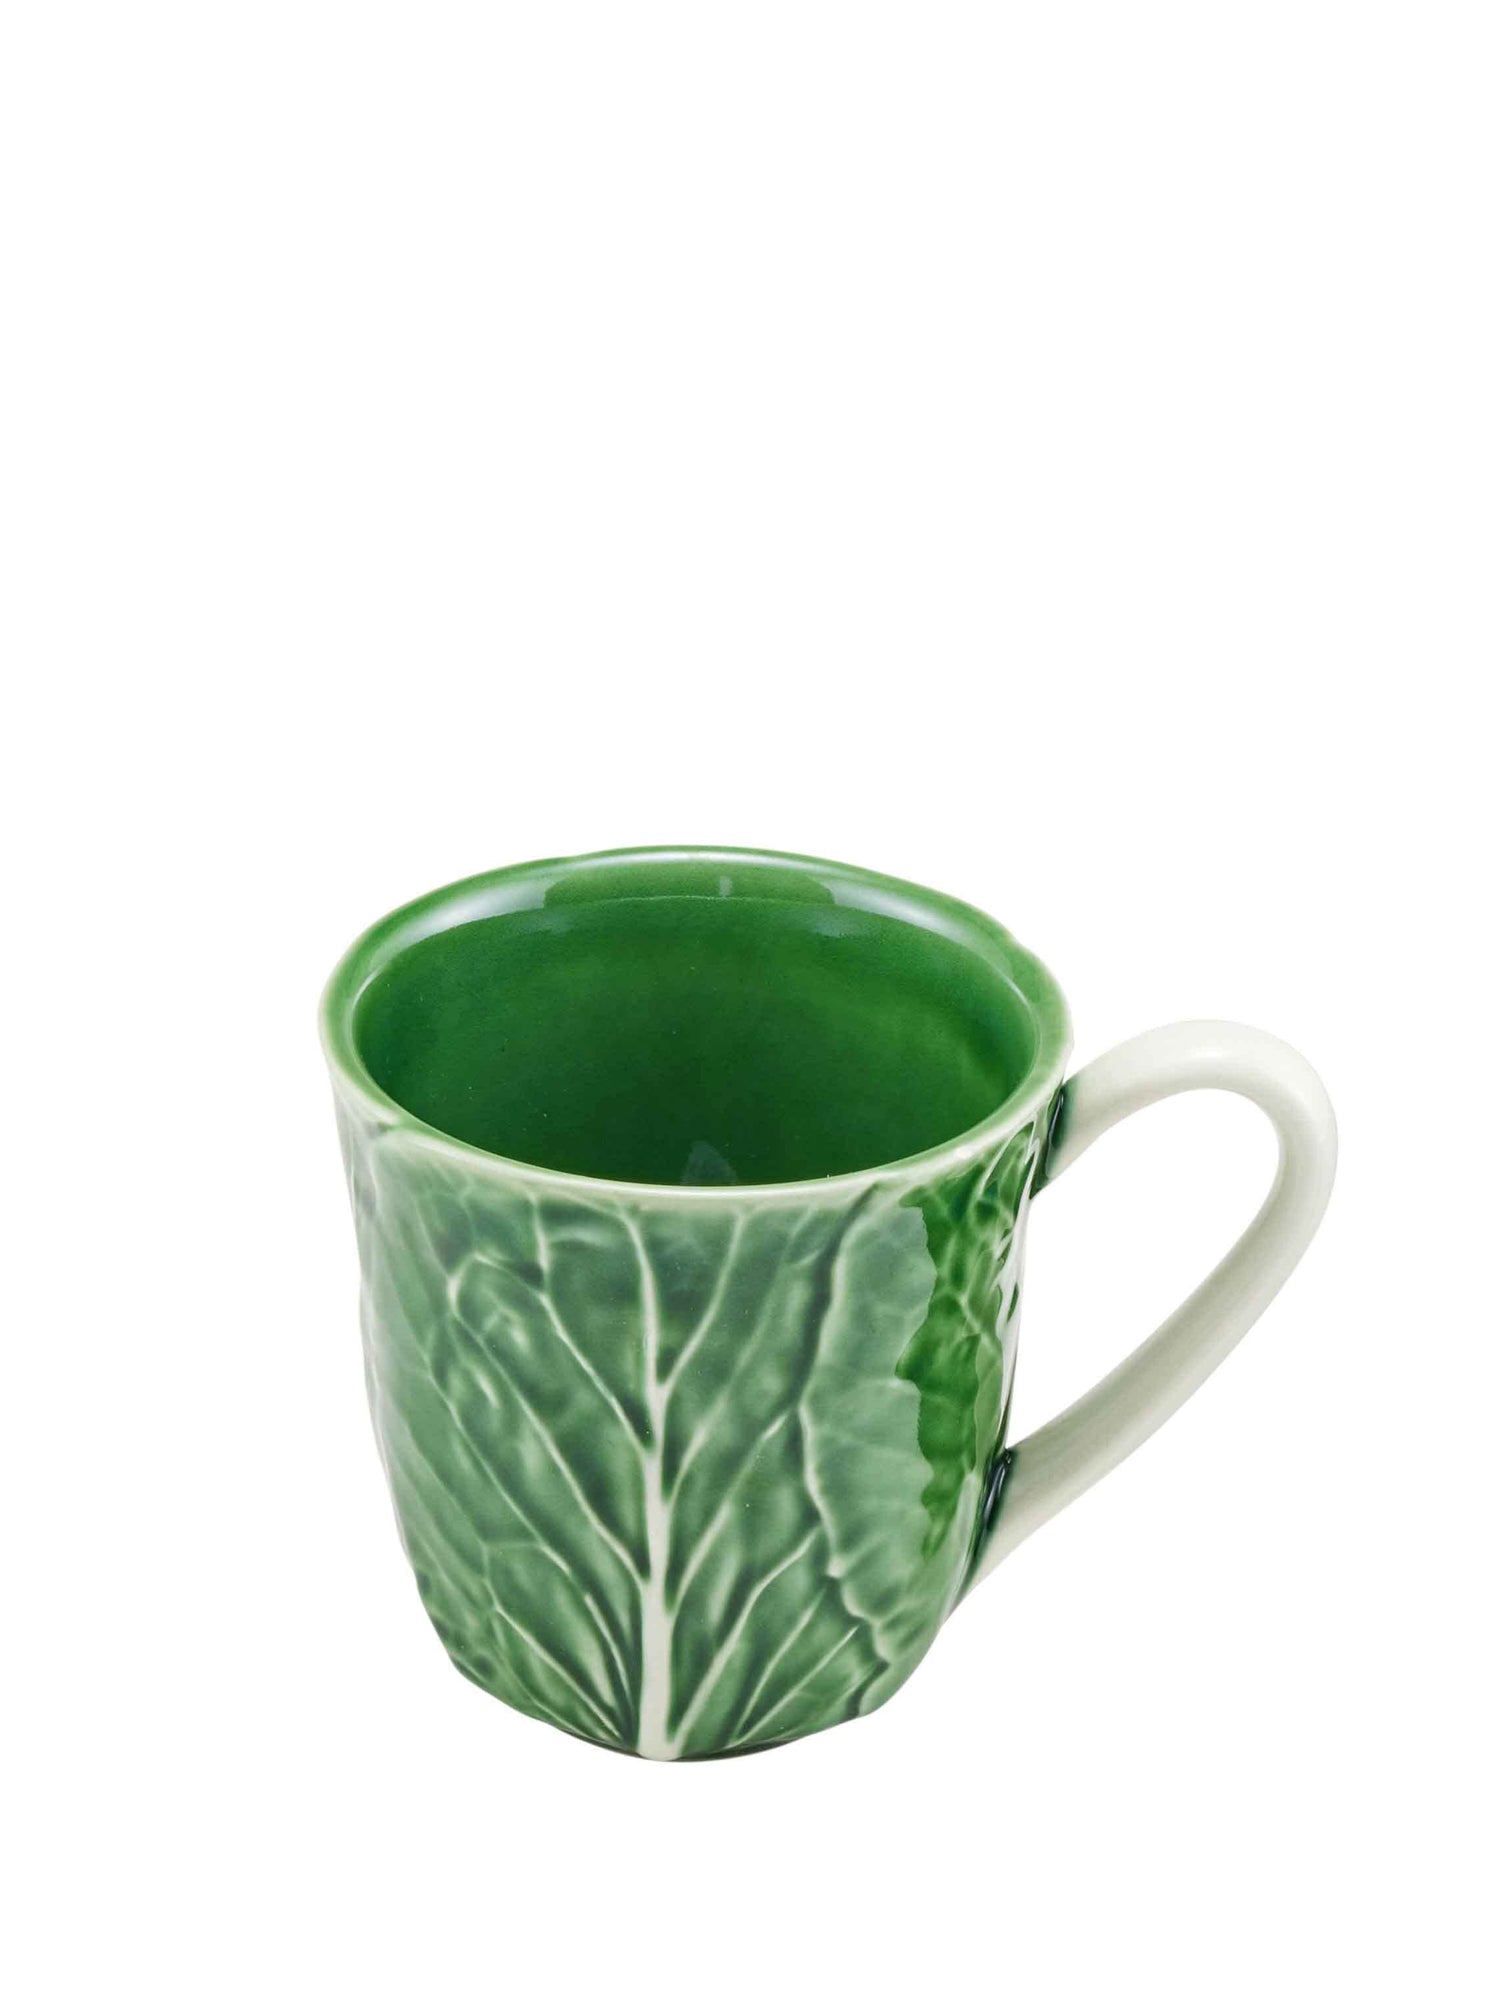 Cabbage Mug, green